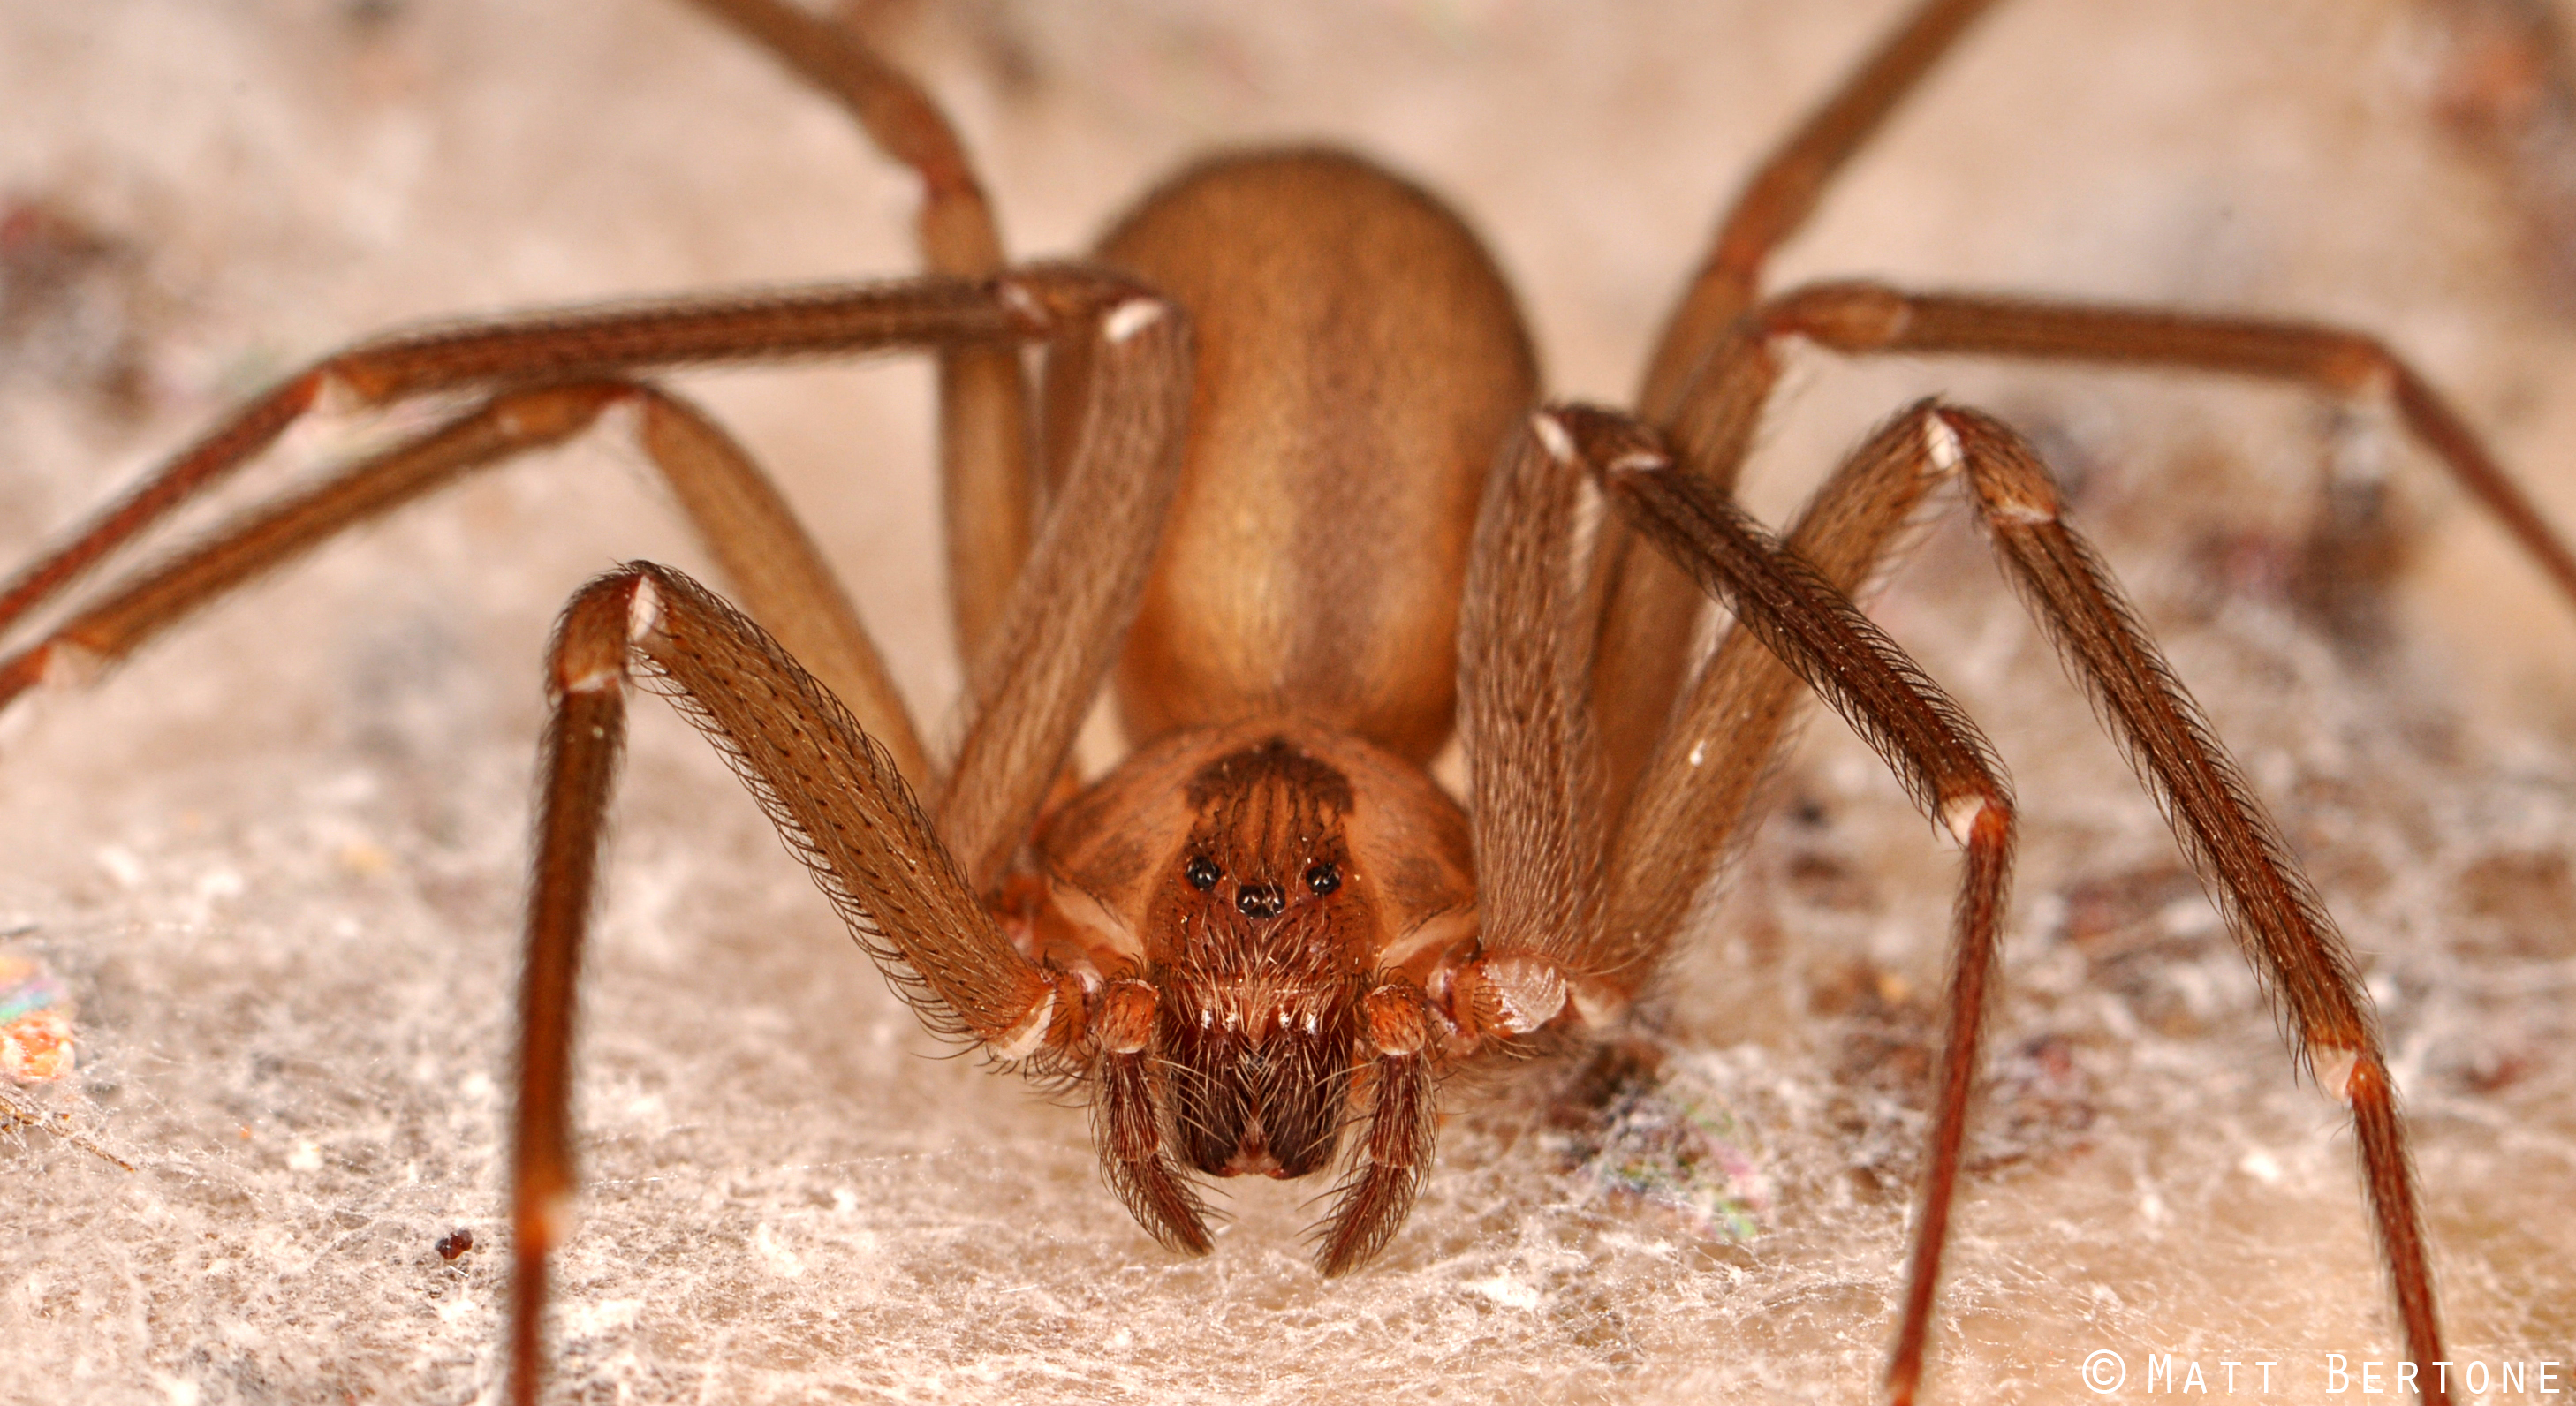 Brown Recluse Spider Bites